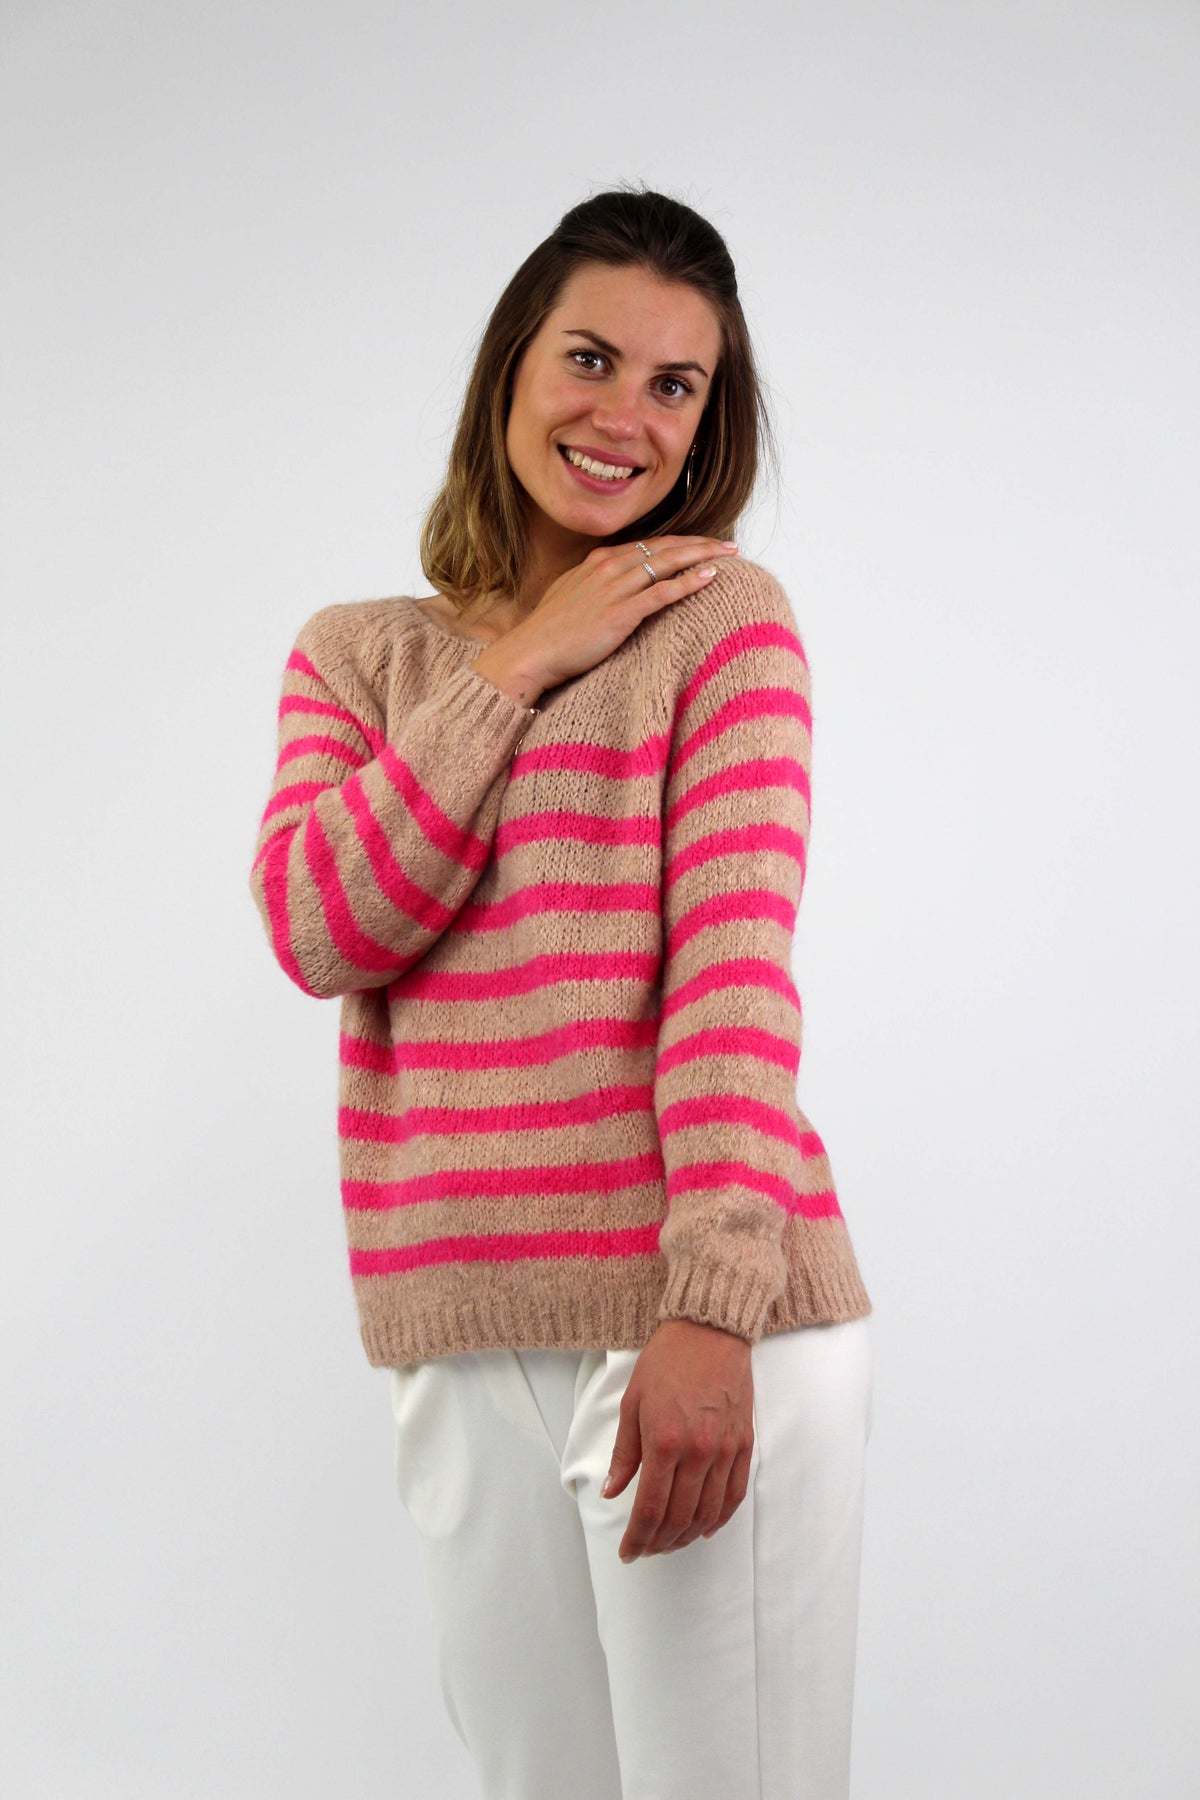 Pullover Streifenoptik - Rosa/Pink